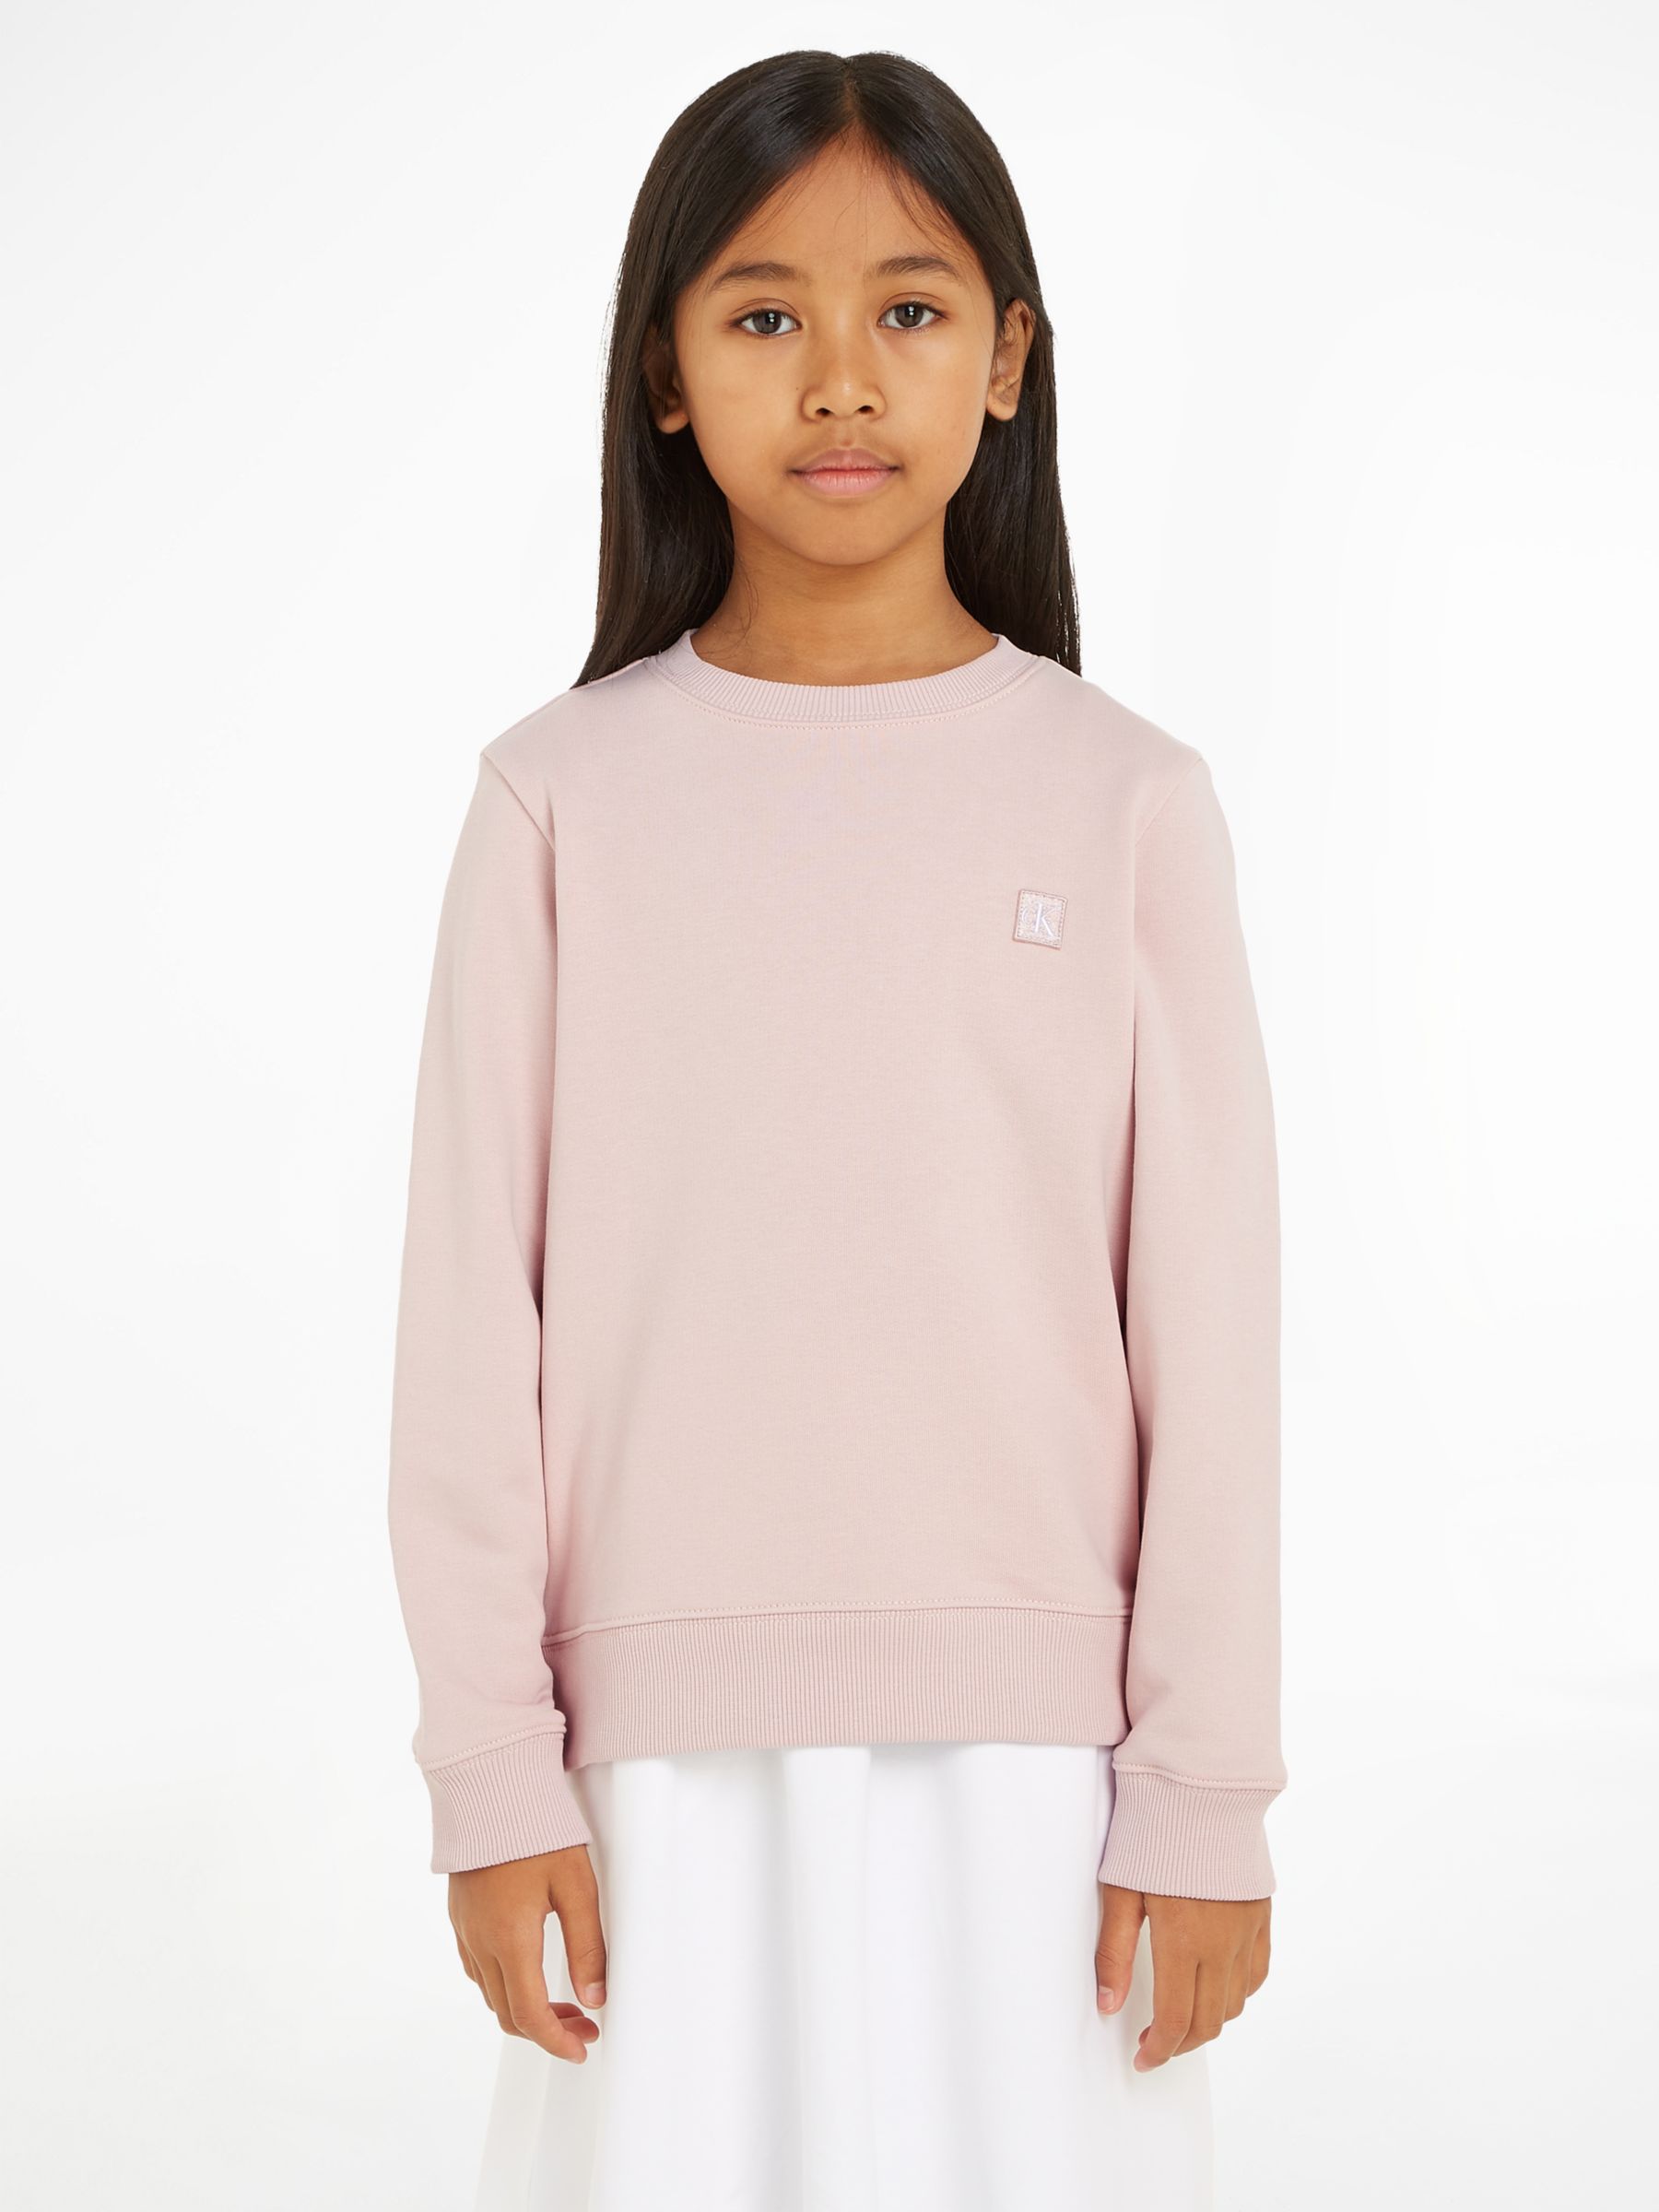 Calvin Klein Kids' Monogram Mini Badge Sweatshirt, Sepia Rose, 10 years